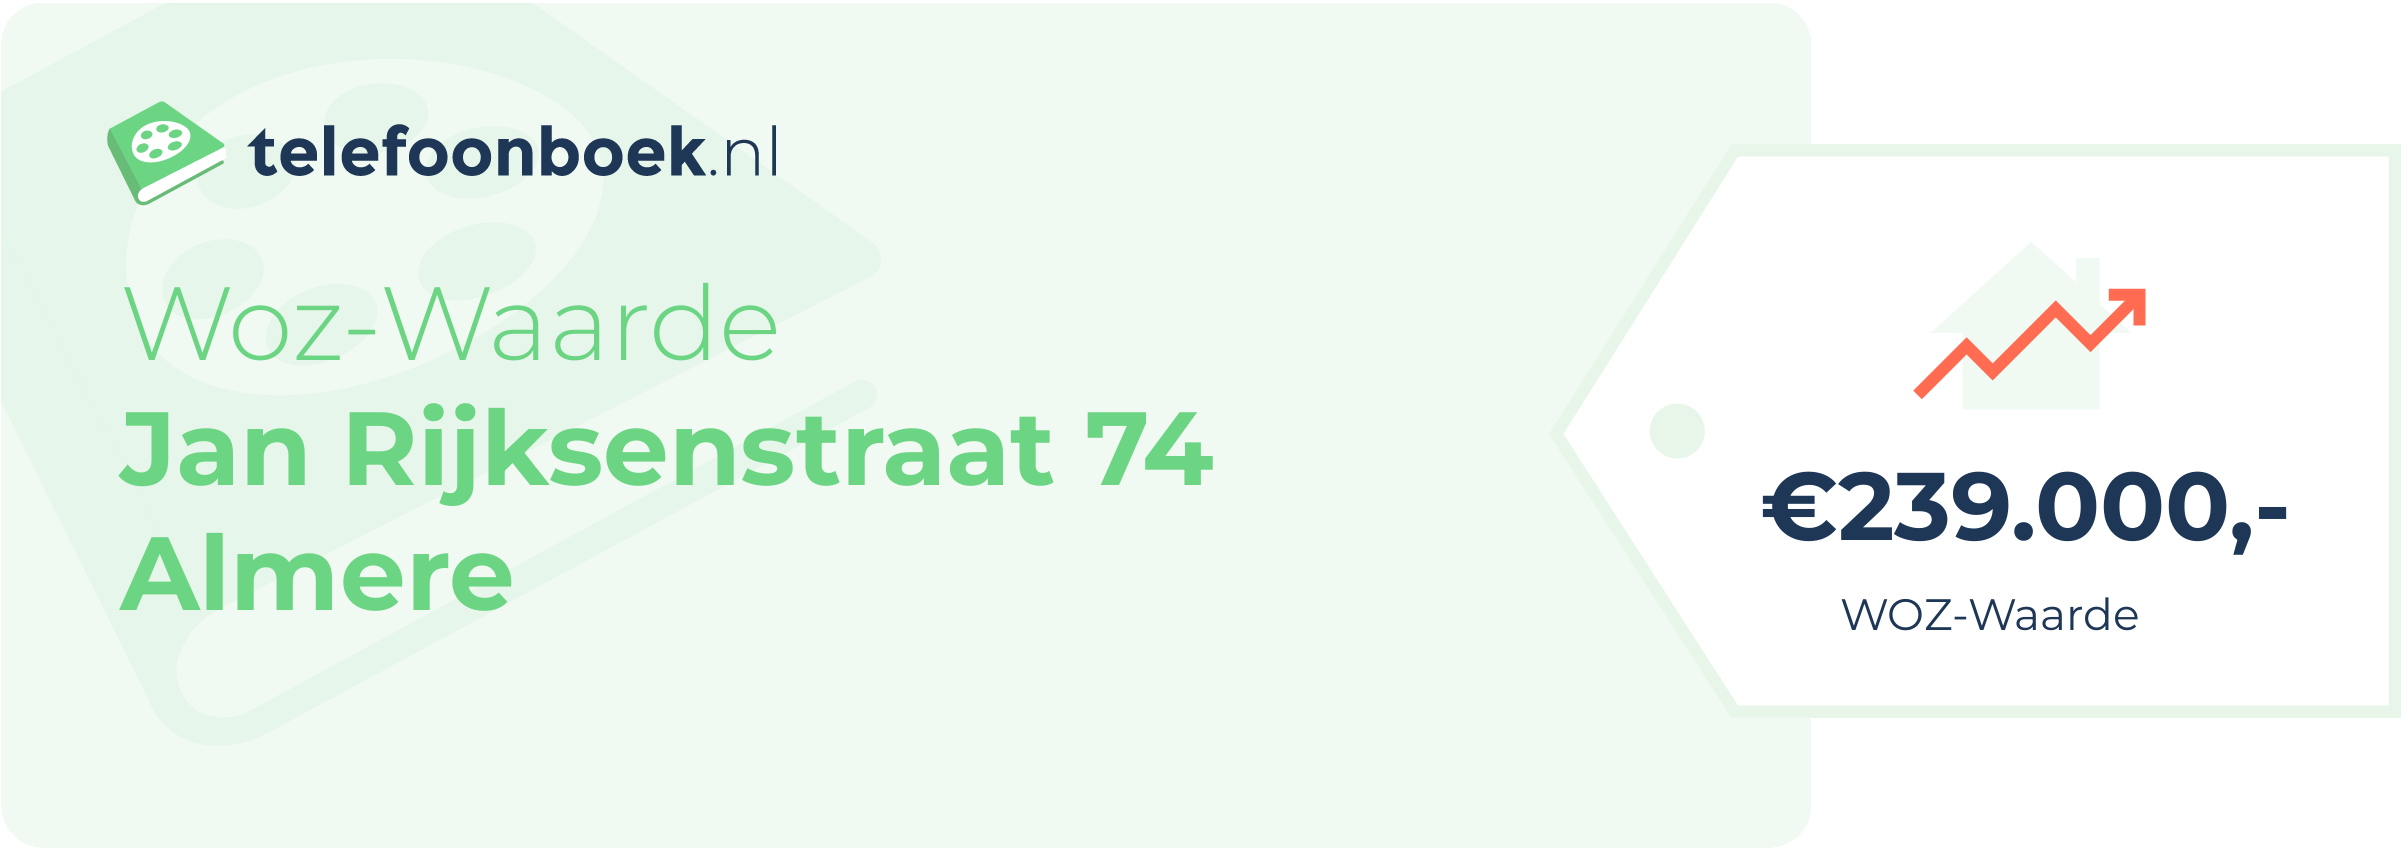 WOZ-waarde Jan Rijksenstraat 74 Almere